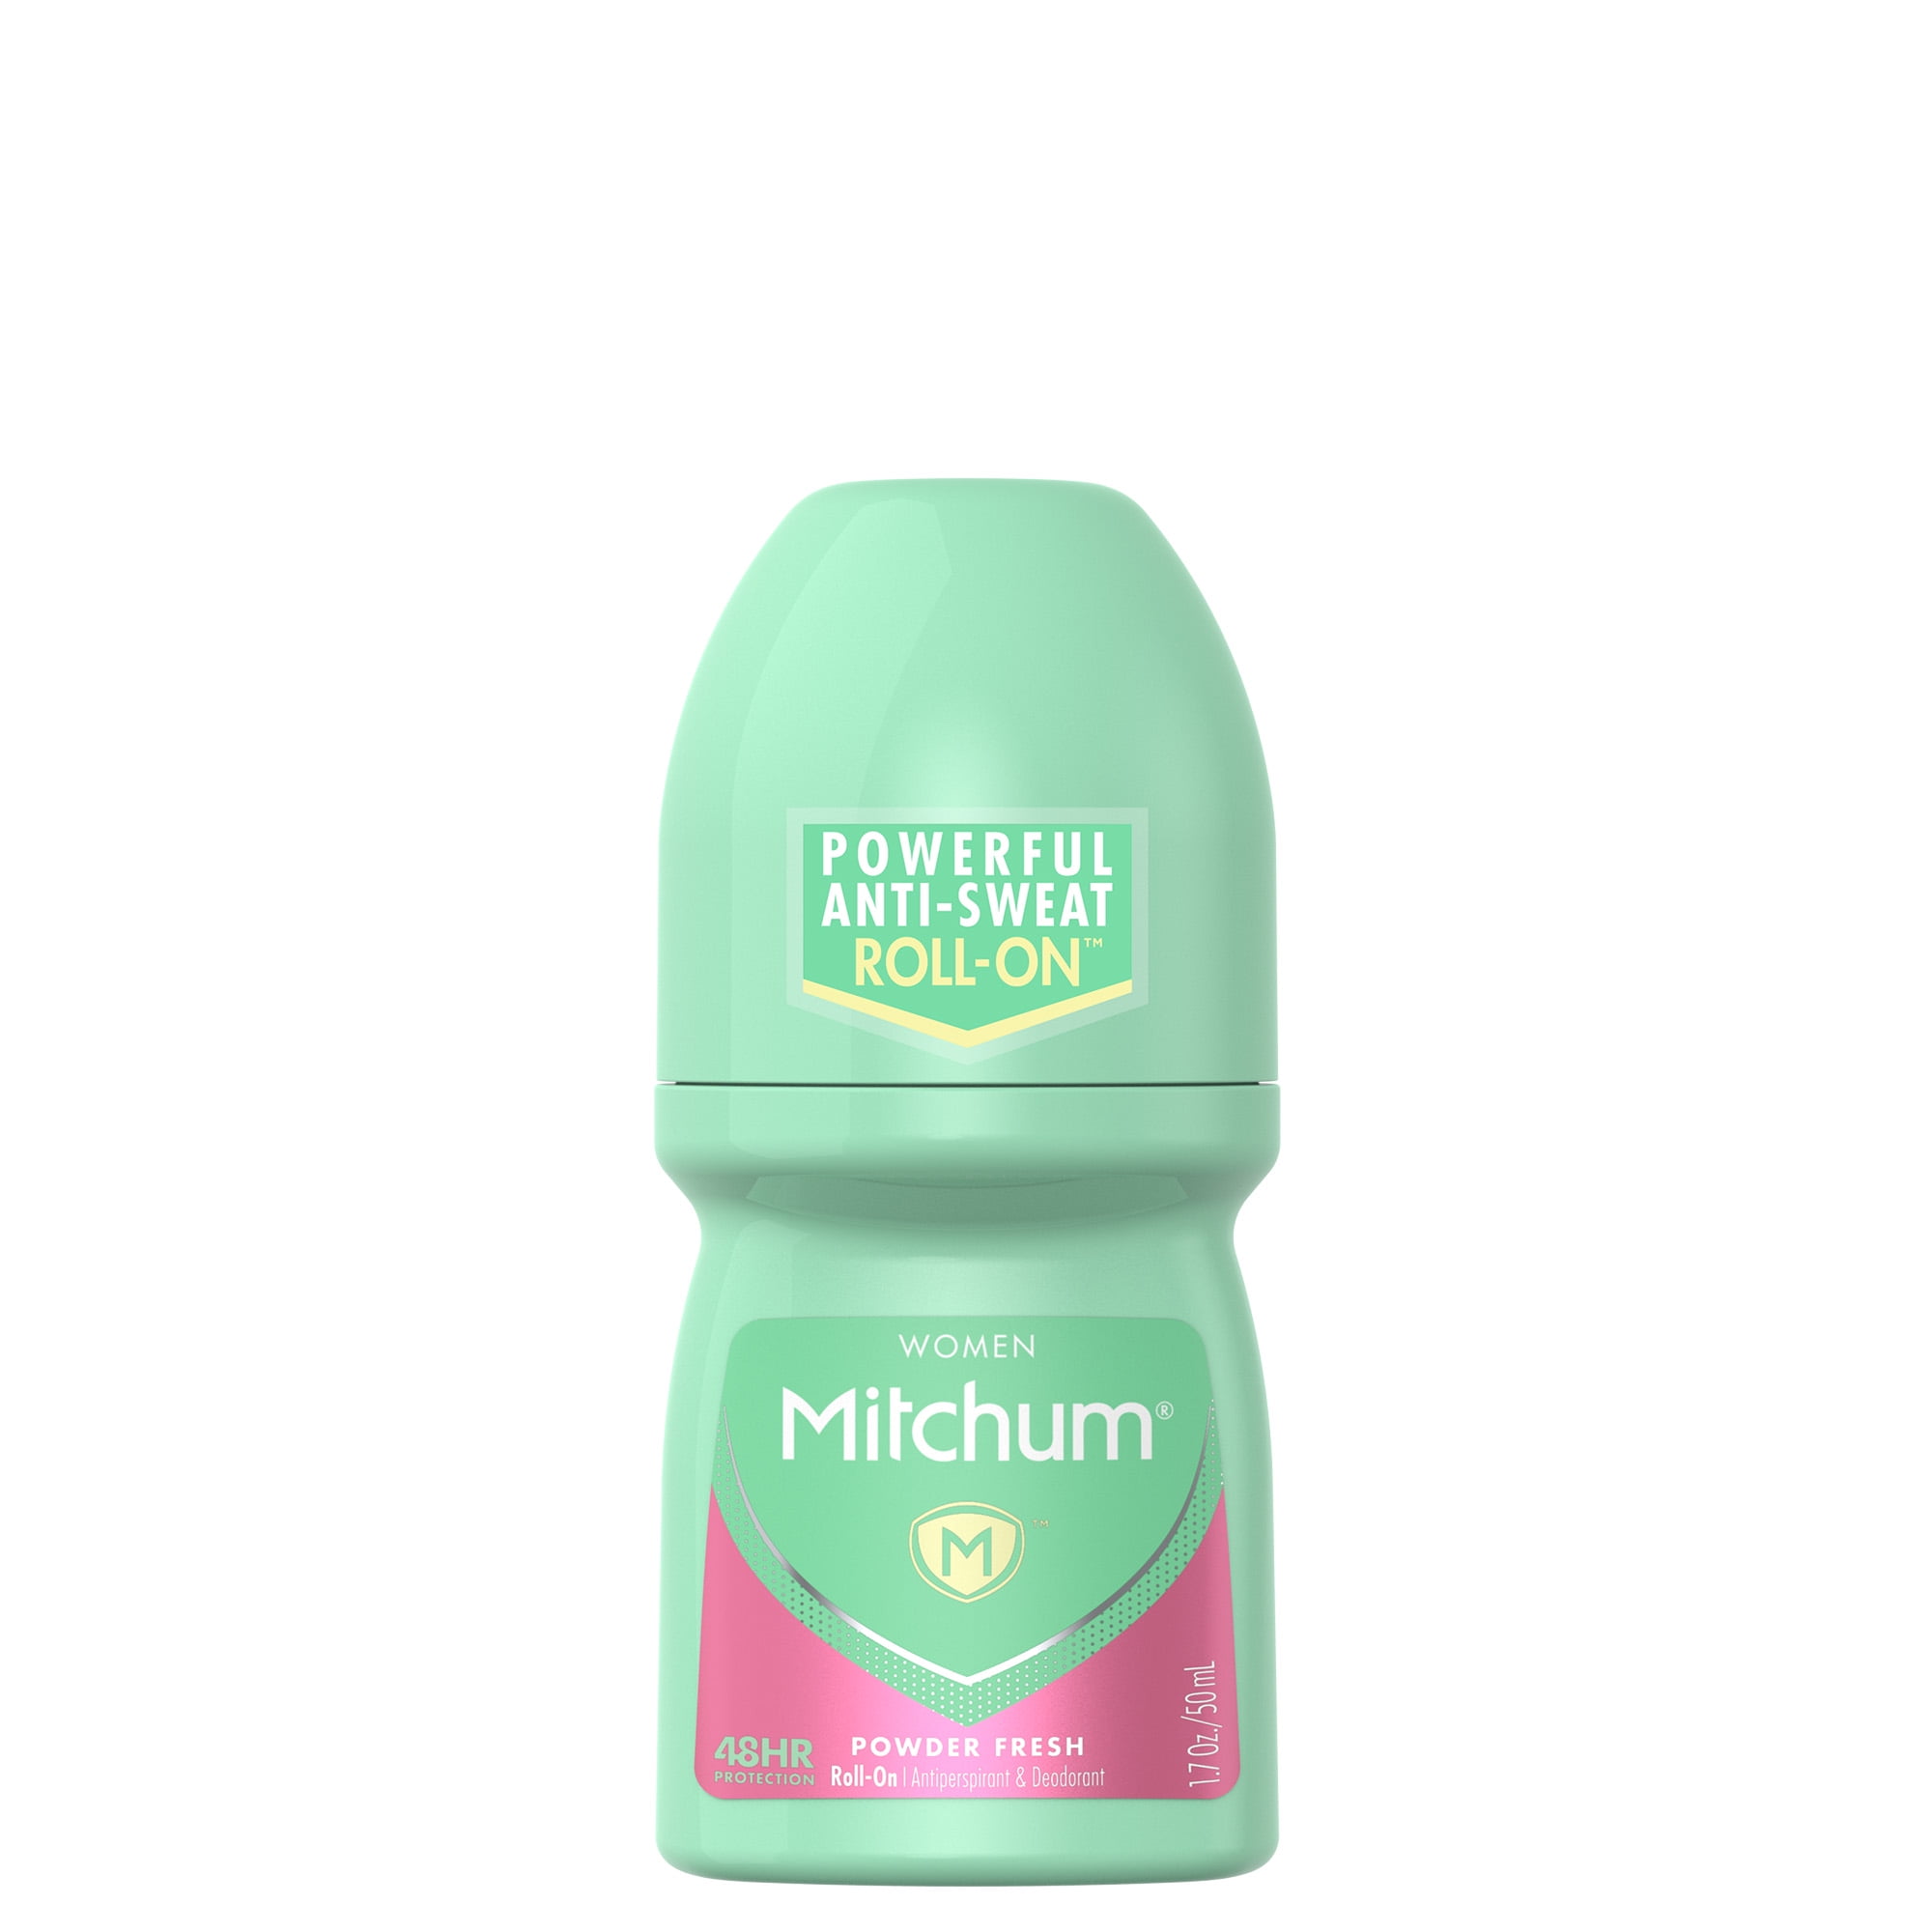 Mitchum Women Powerful Anti-Sweat Antiperspirant Deodorant Roll On, Powder Fresh, 1.7oz - image 1 of 4